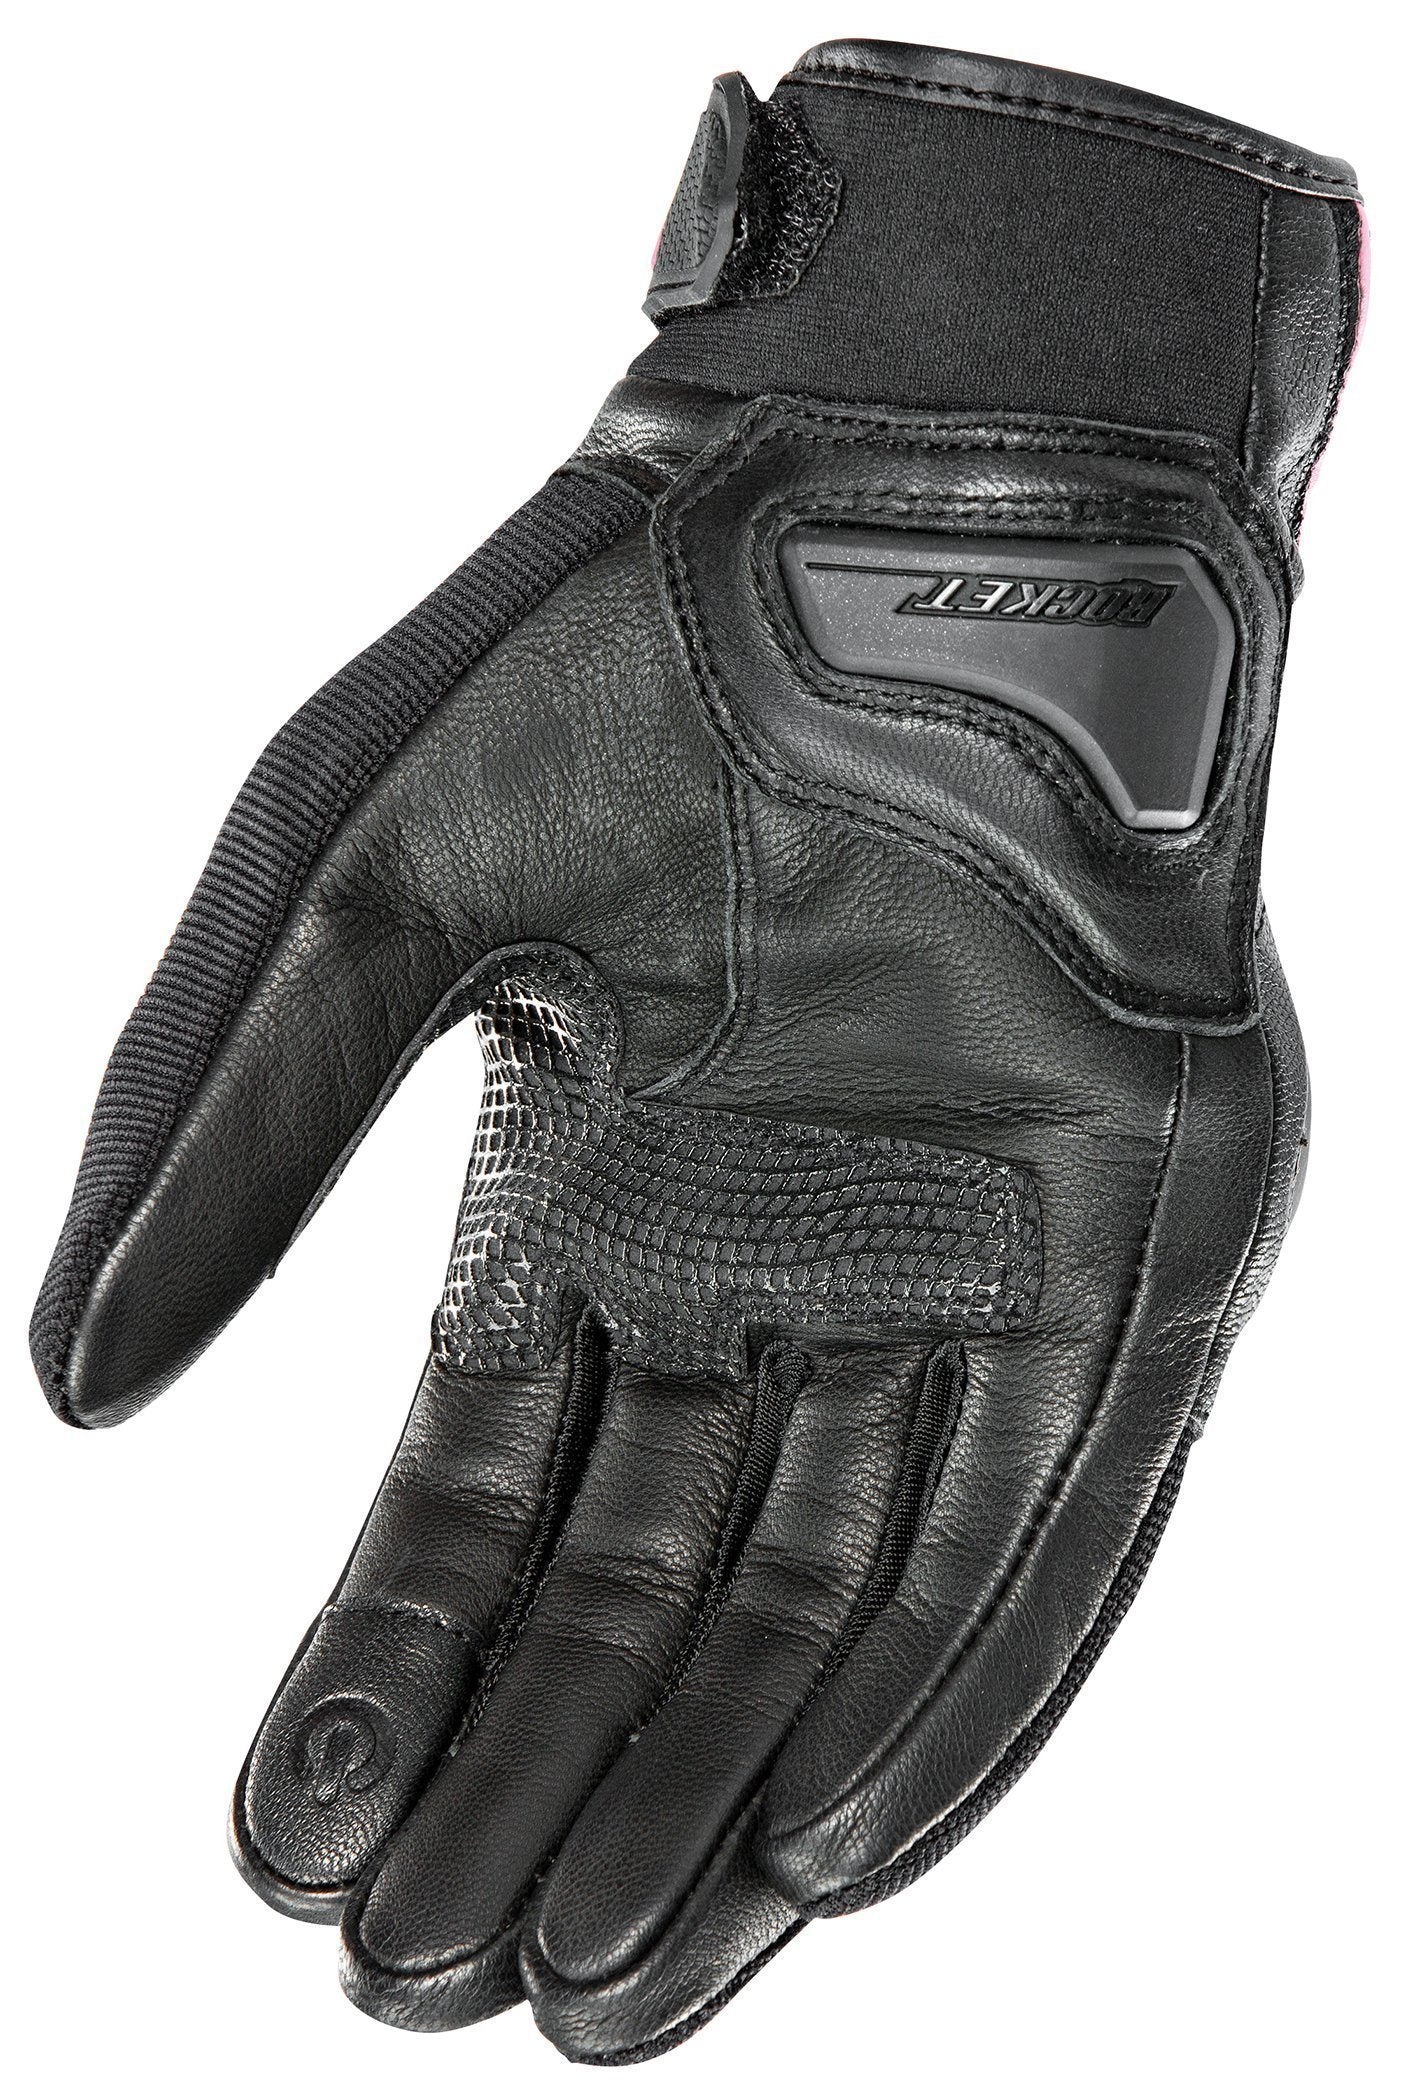 Joe Rocket Super Moto Women's Black/White/Pink Leather/Textile Gloves